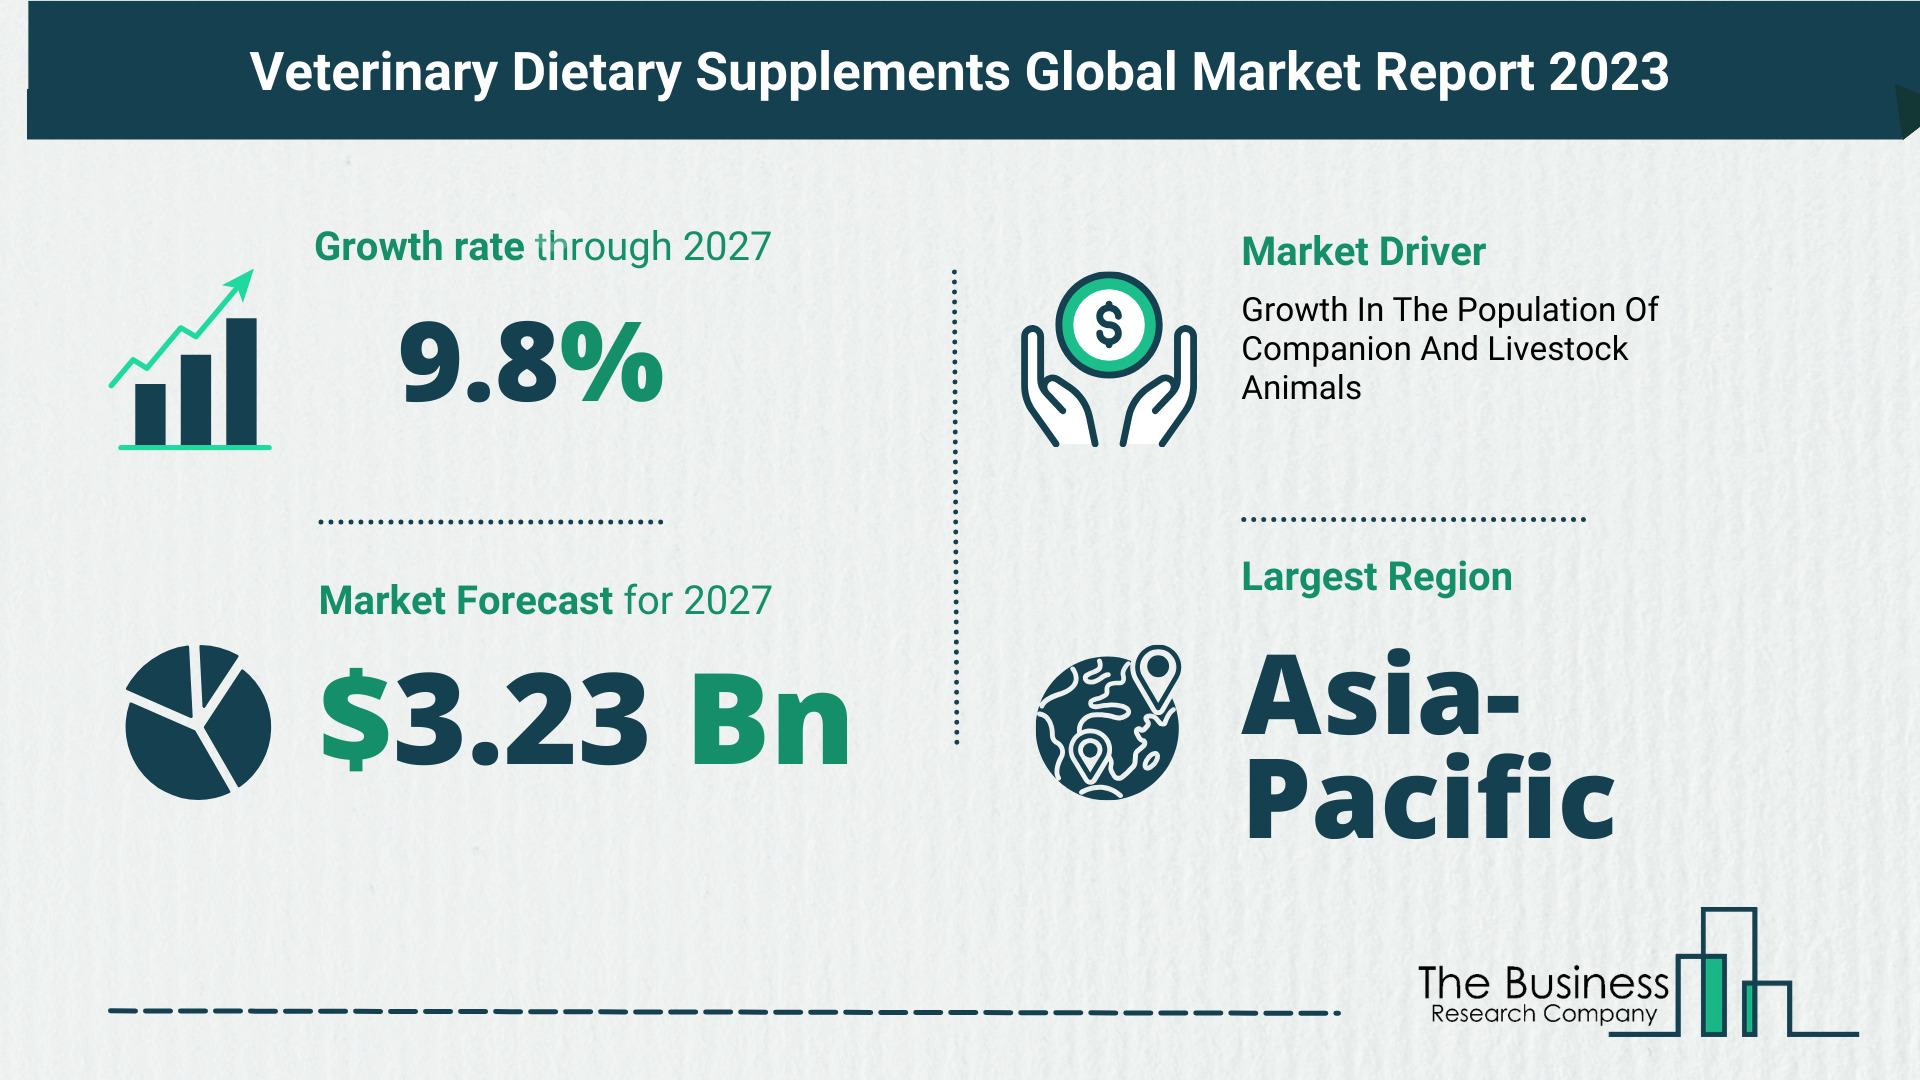 Global Veterinary Dietary Supplements Market